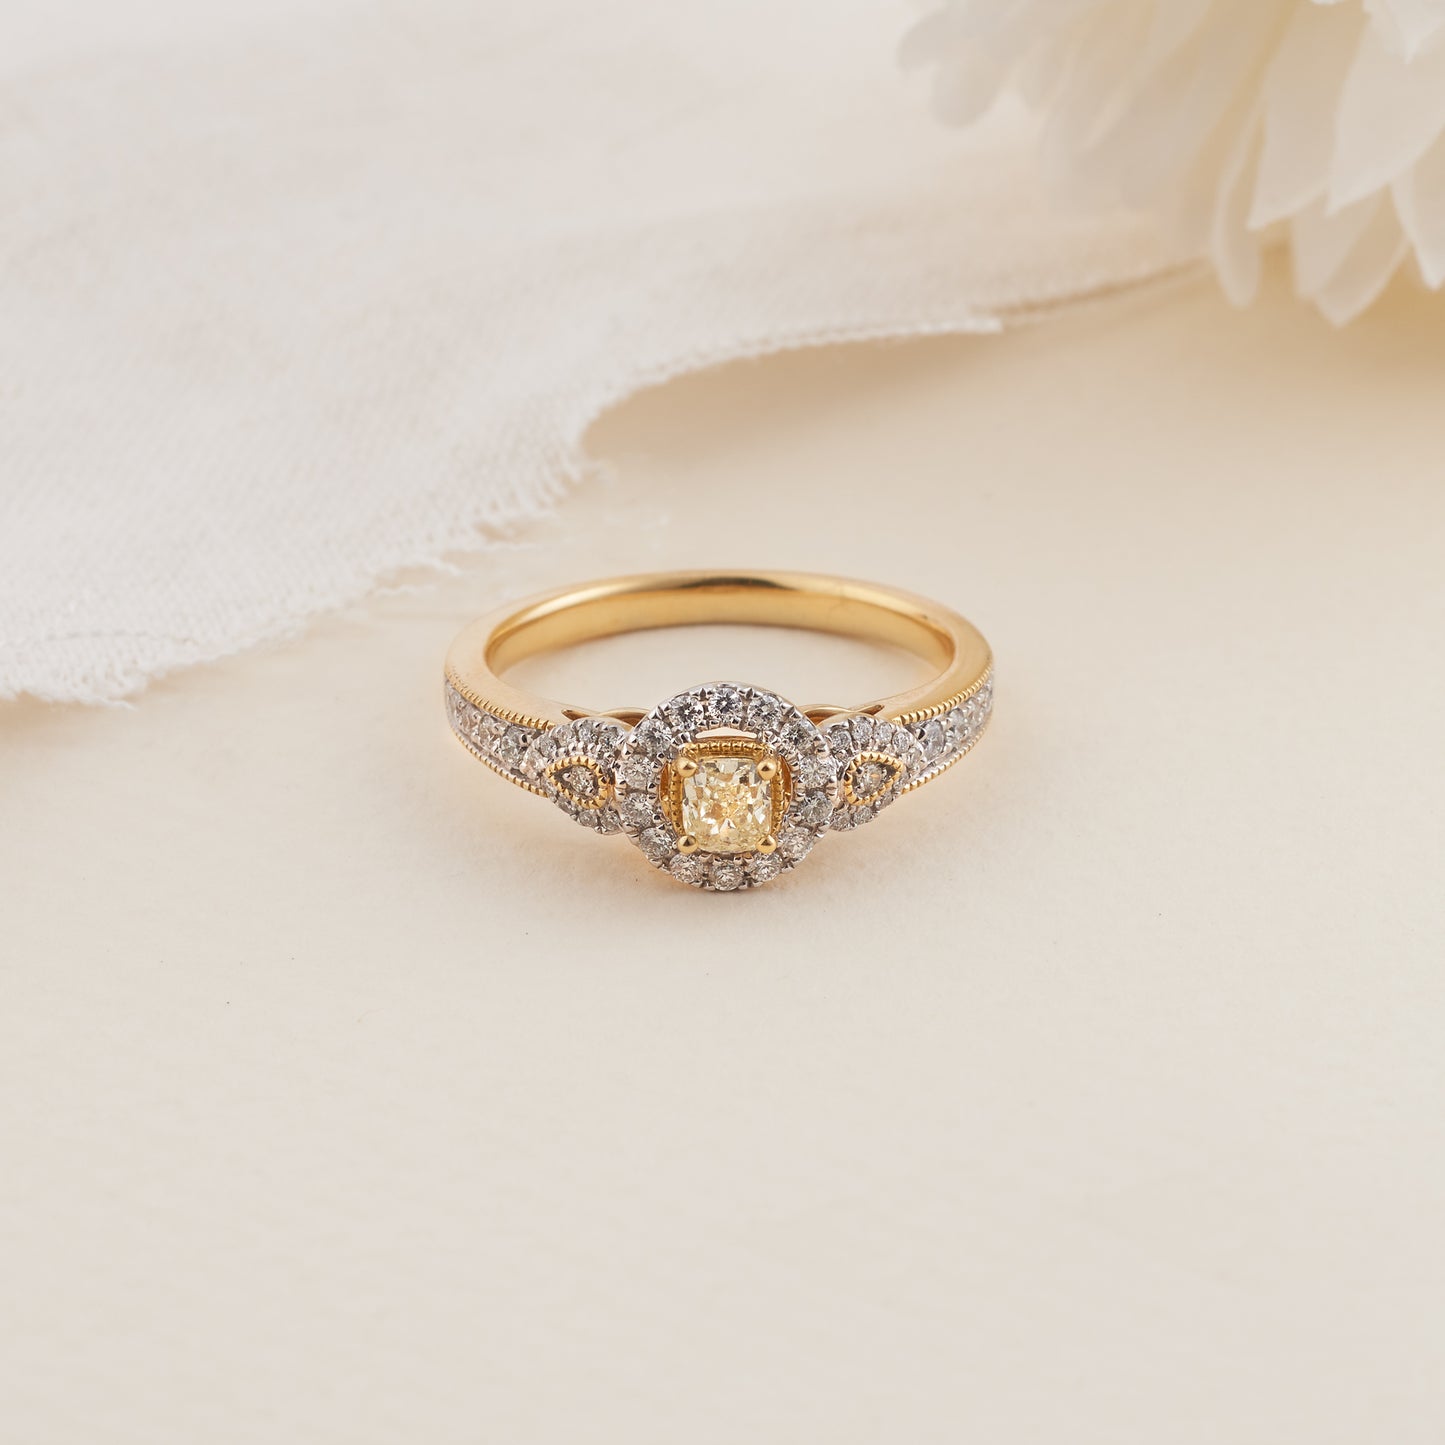 18K Yellow Gold Pale Yellow Diamond Halo Vintage Inspired Engagement Ring 0.6tdw